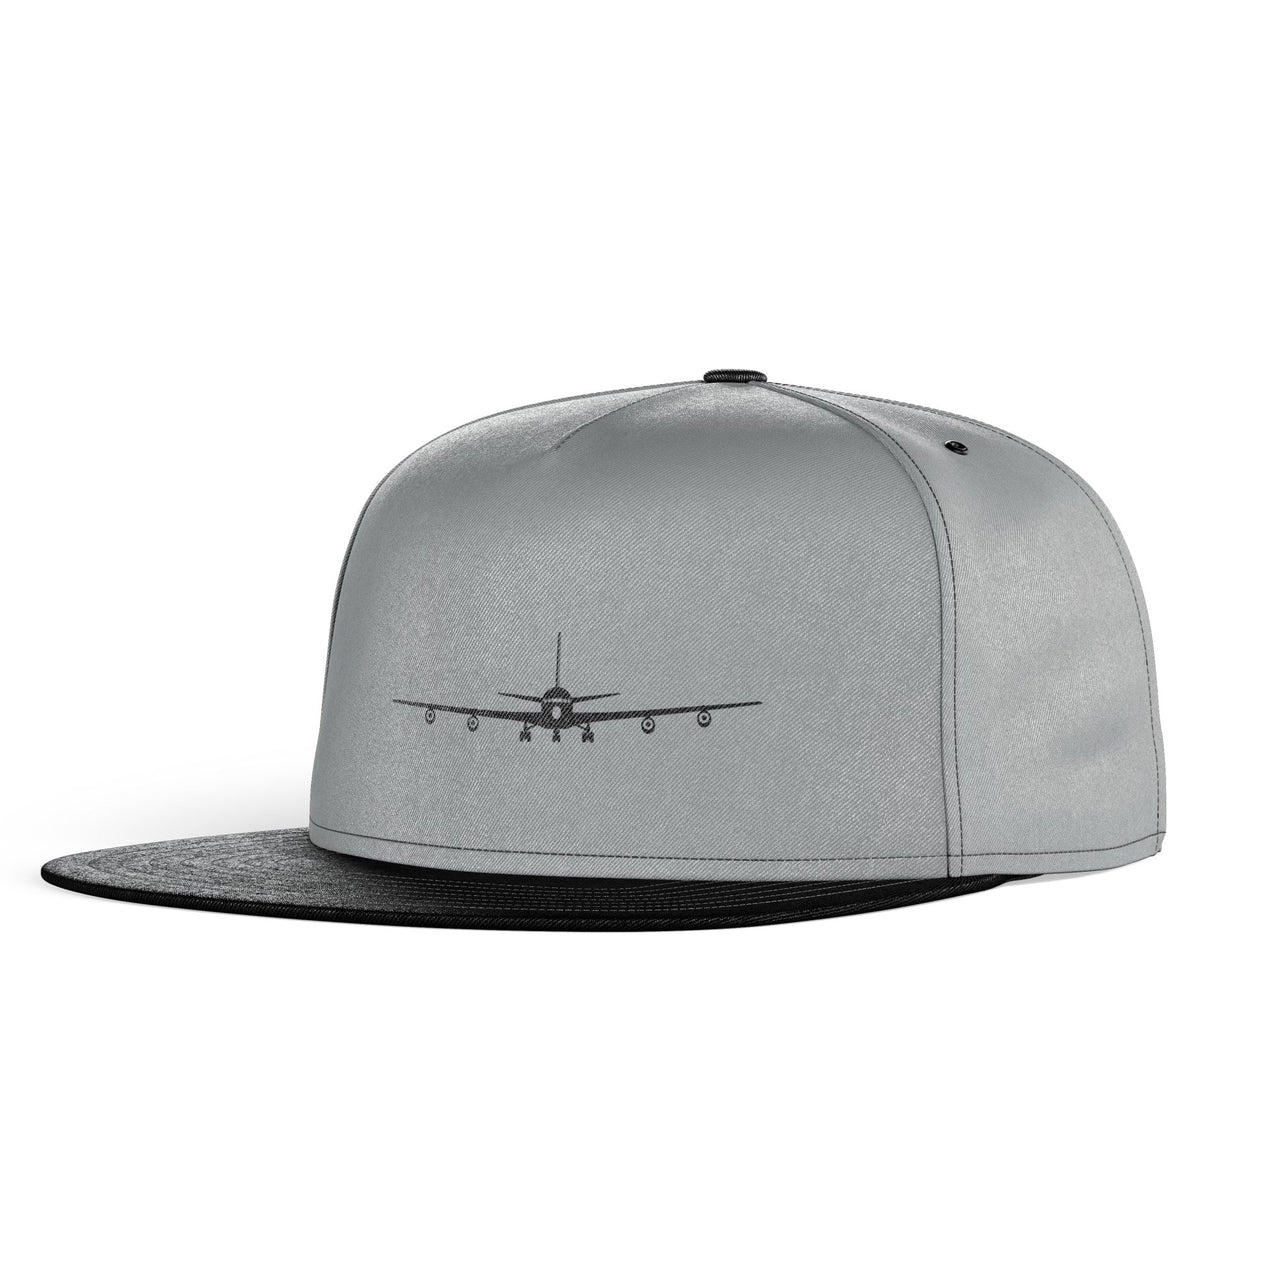 Boeing 707 Silhouette Designed Snapback Caps & Hats